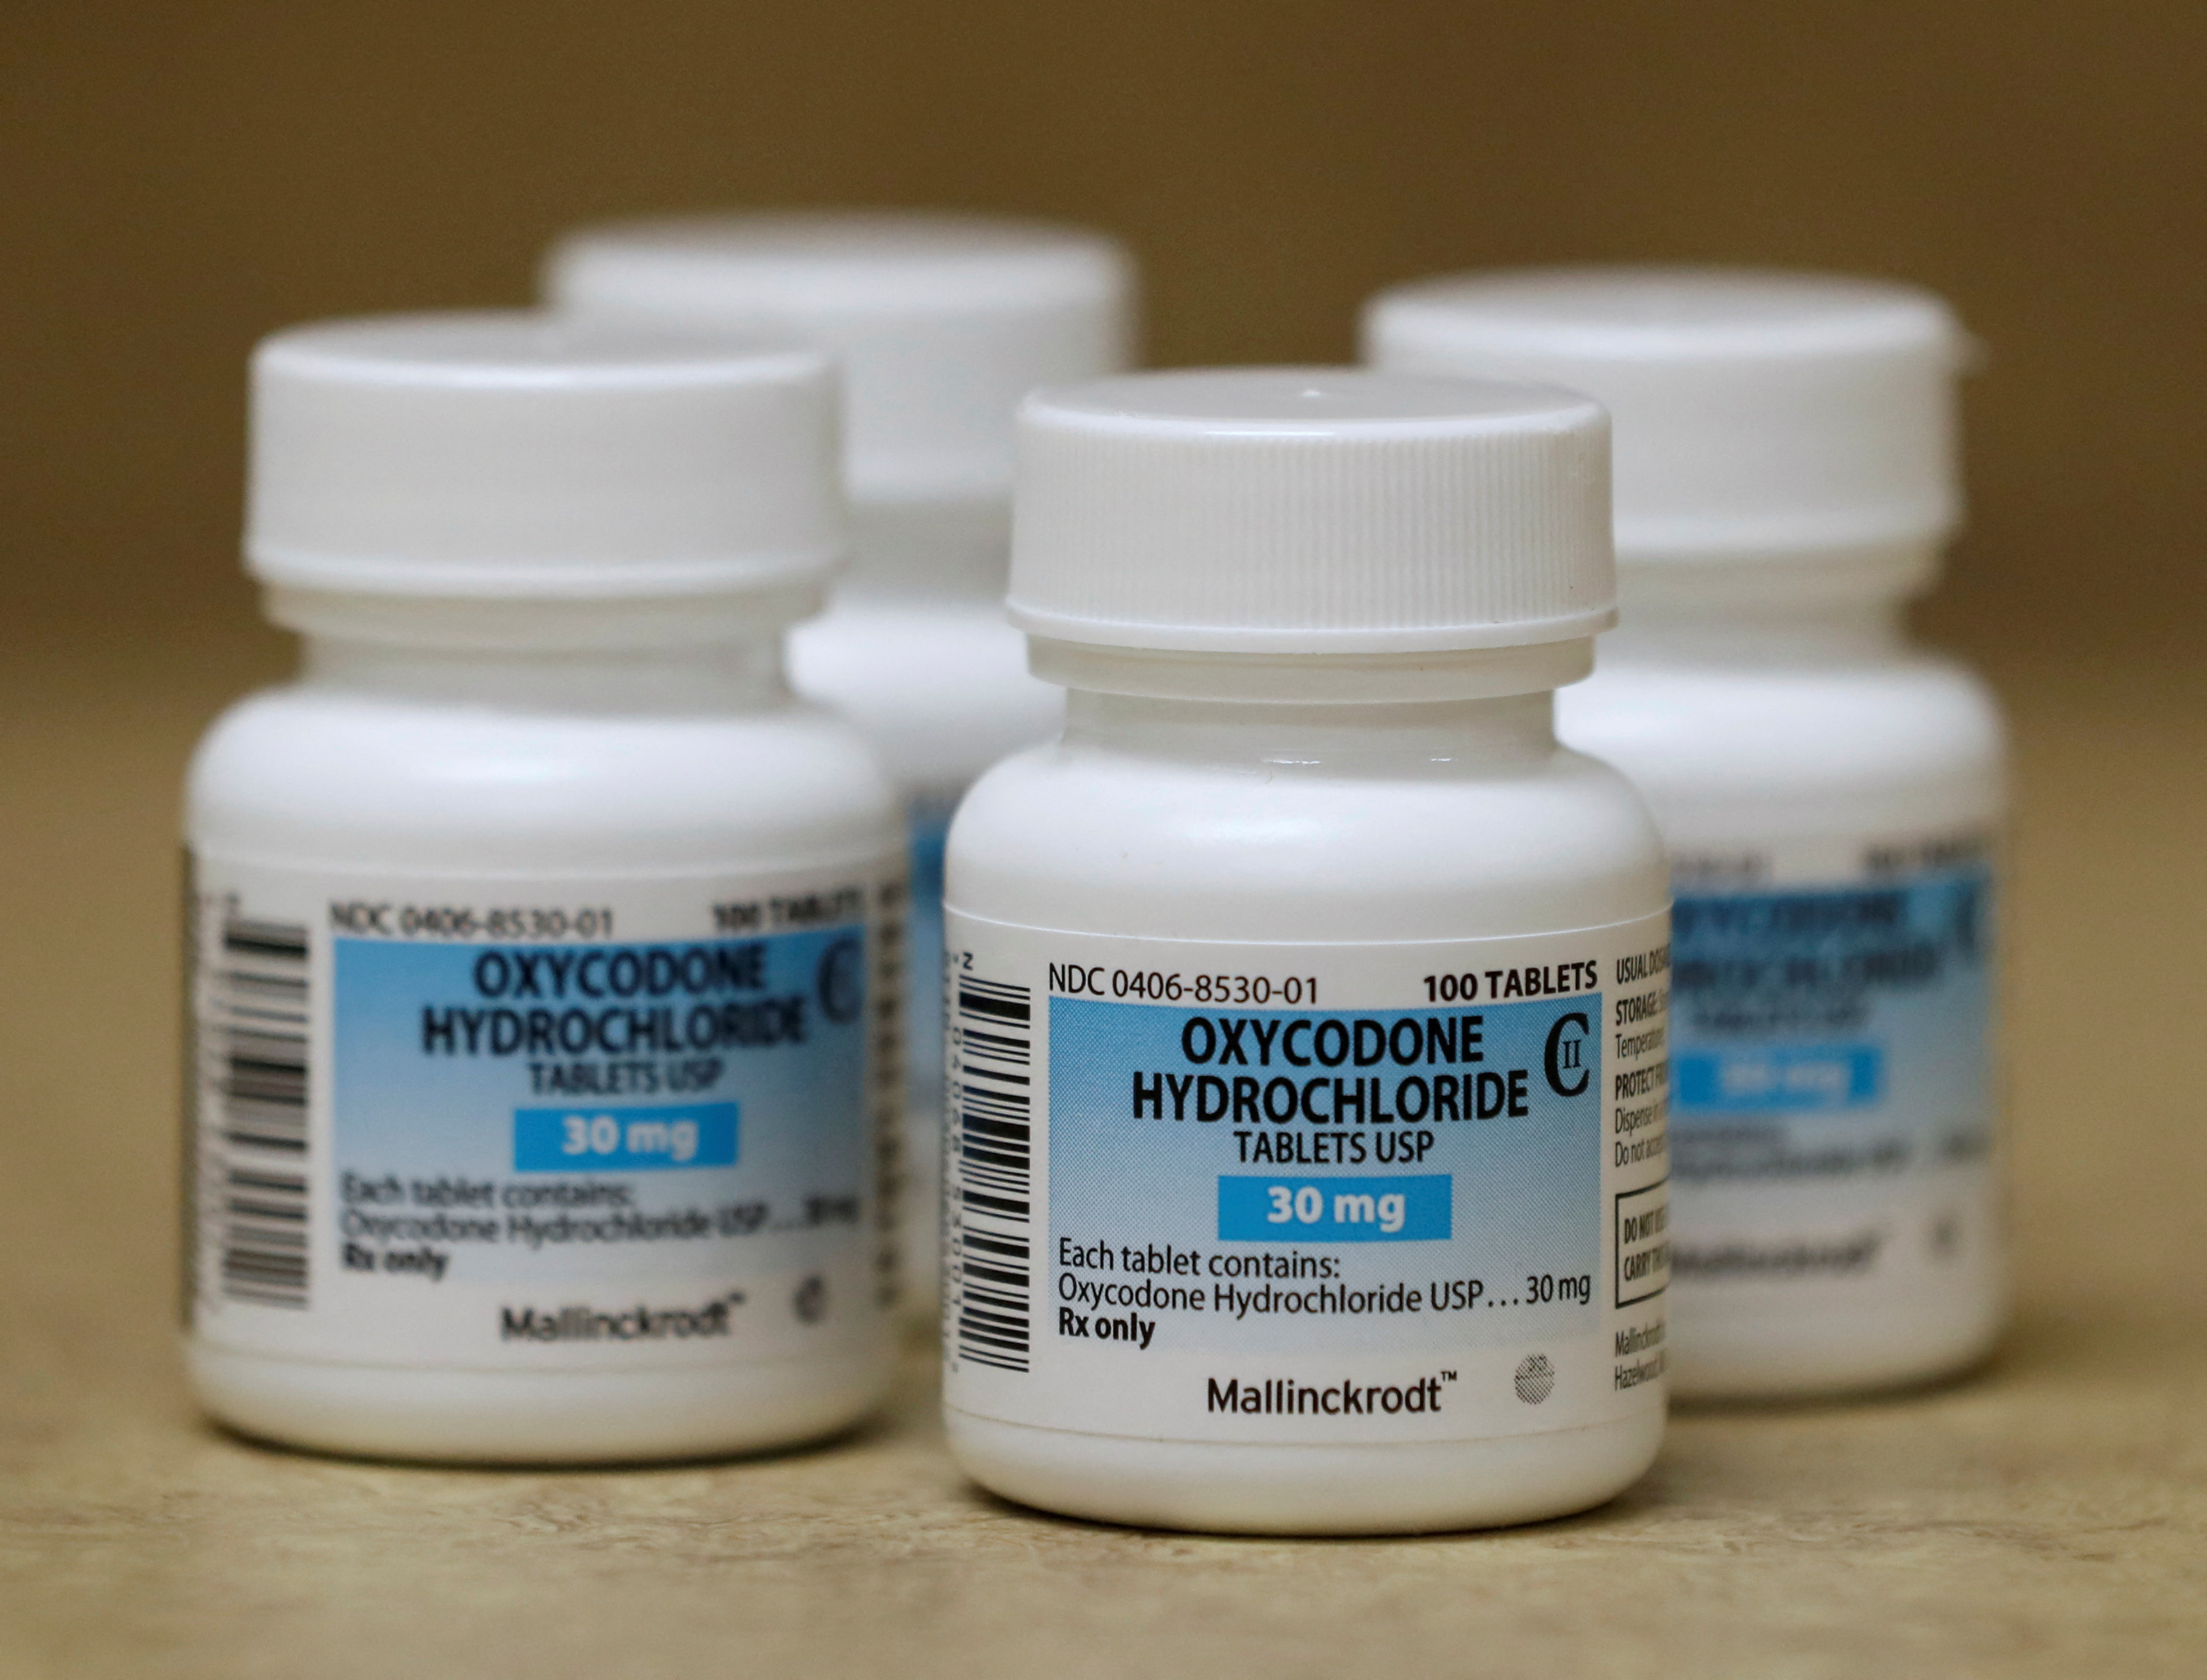 Bottles of prescription painkillers Oxycodone Hydrochloride, 30mg pills, made by Mallinckrodt